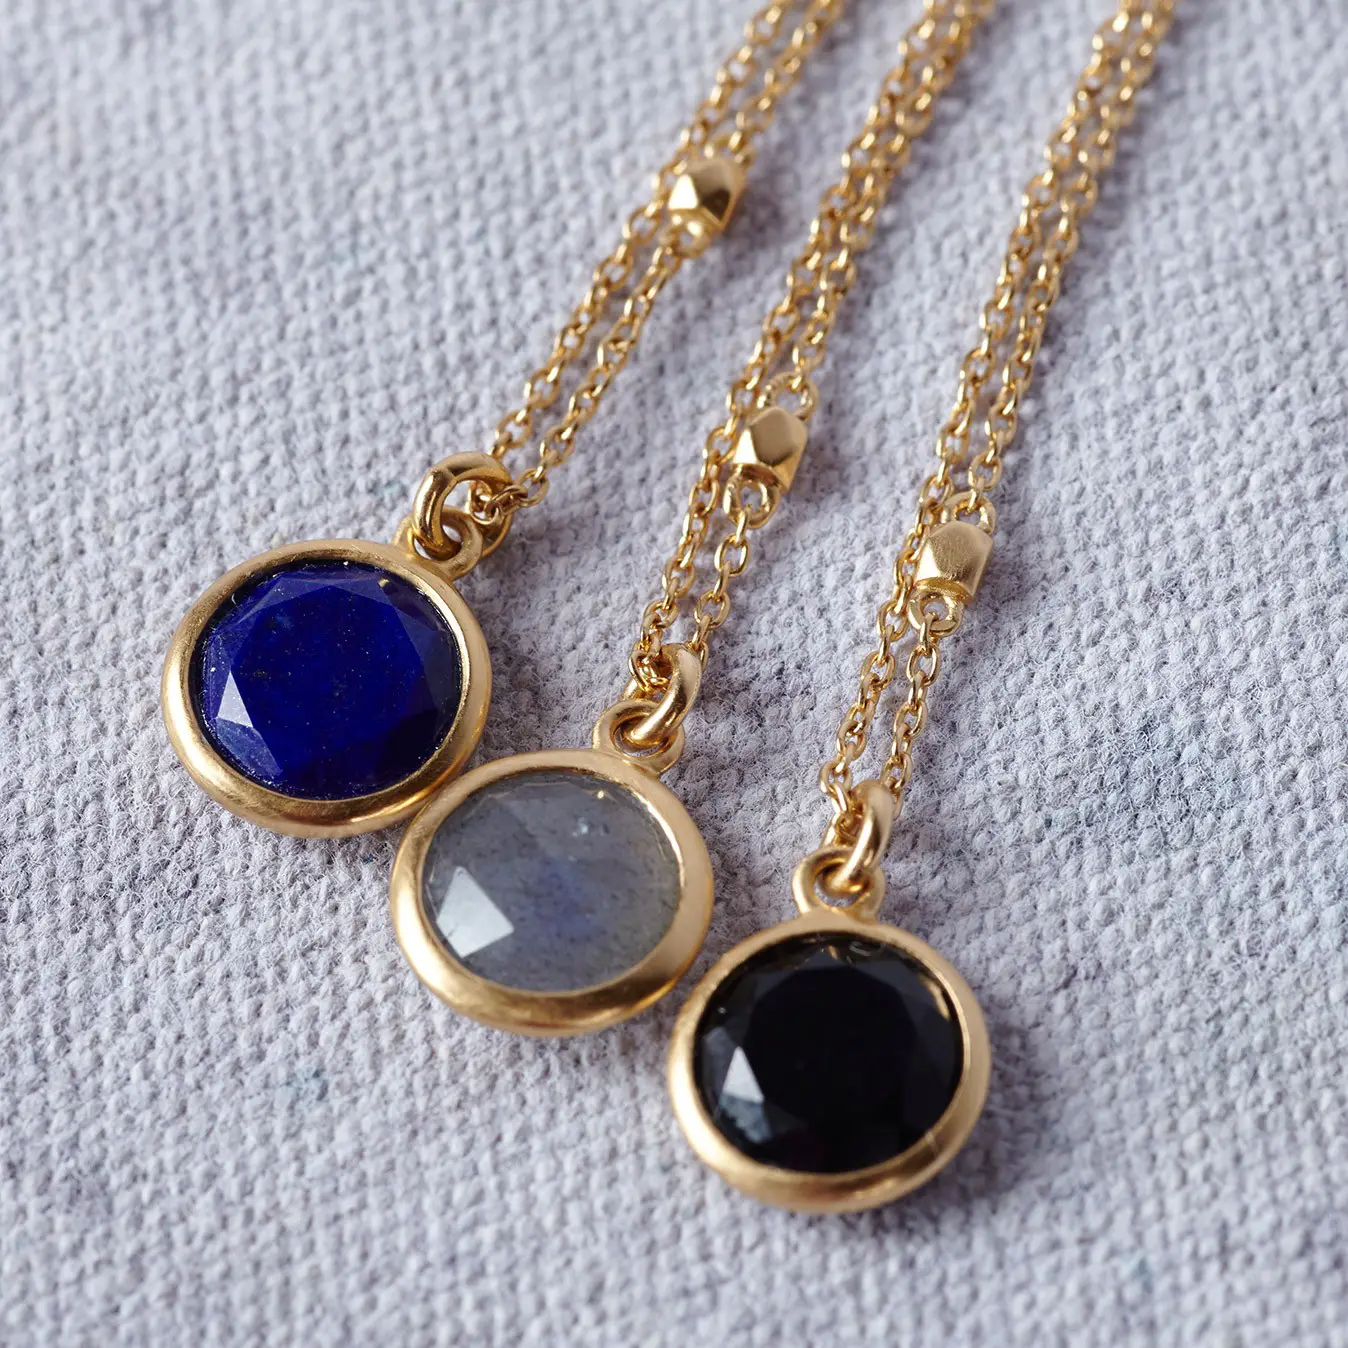 The Duchess of Cambridge's £160 Astley Clarke Round Stilla Lapis Lazuli Pendant Necklace is available in 7 stones